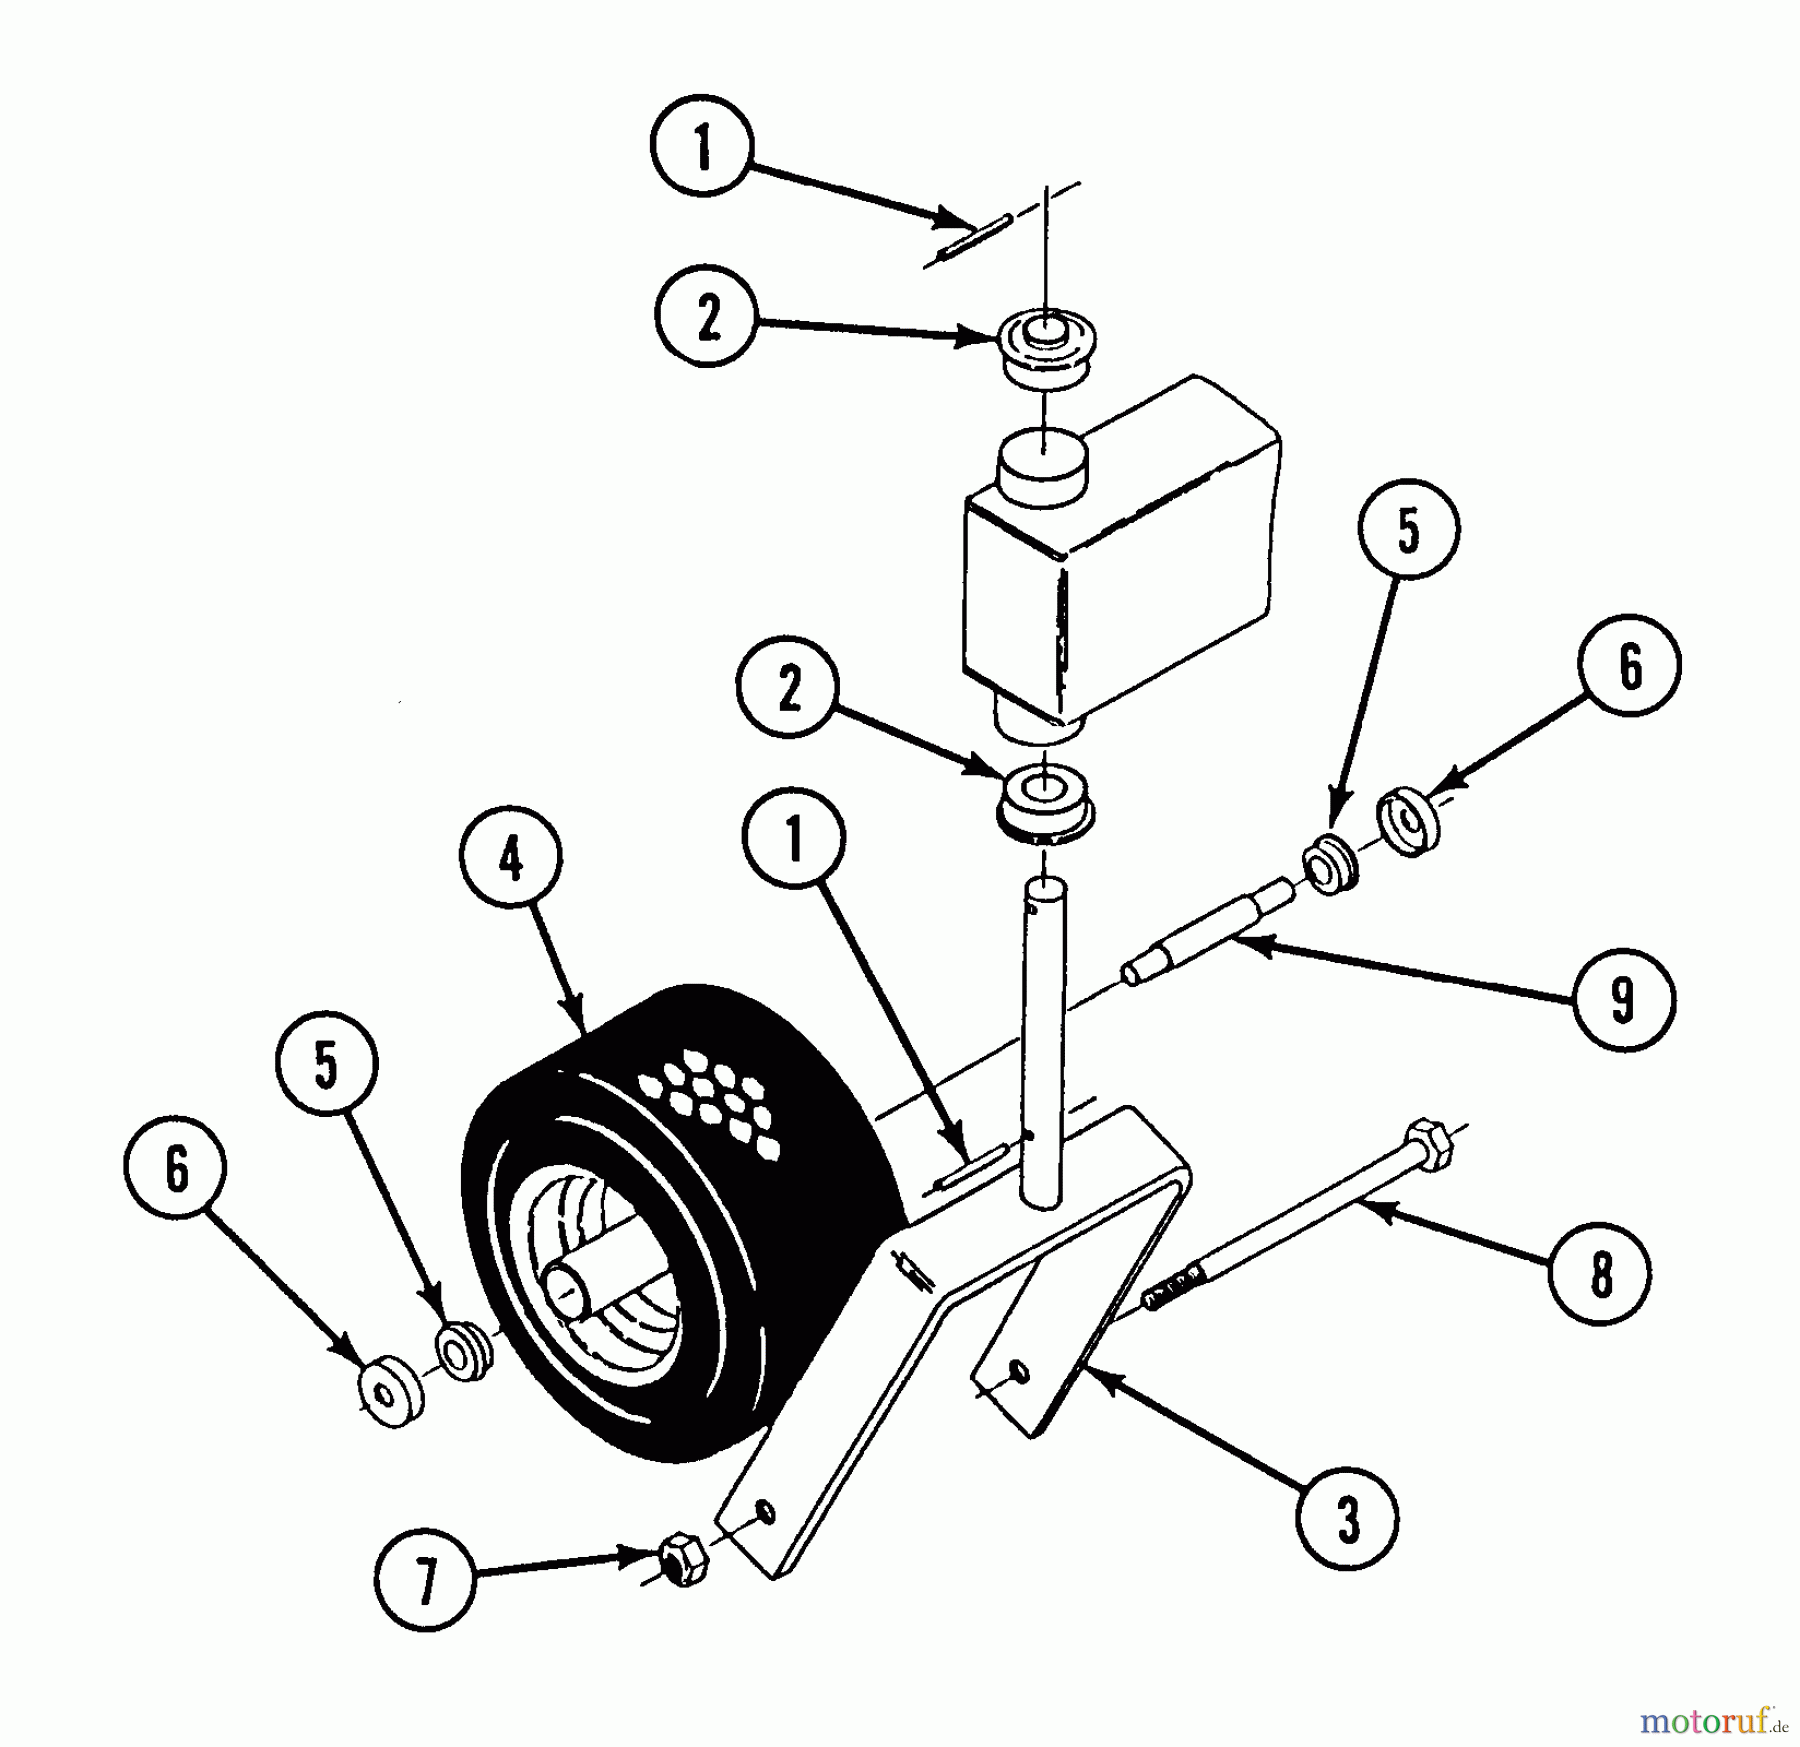  Snapper Nullwendekreismäher, Zero-Turn 1810 - Snapper Zero-Turn Mower, 18 HP Kohler, Twin Stick, Unistat Drive, ZTR Series 0 Caster Wheel Parts